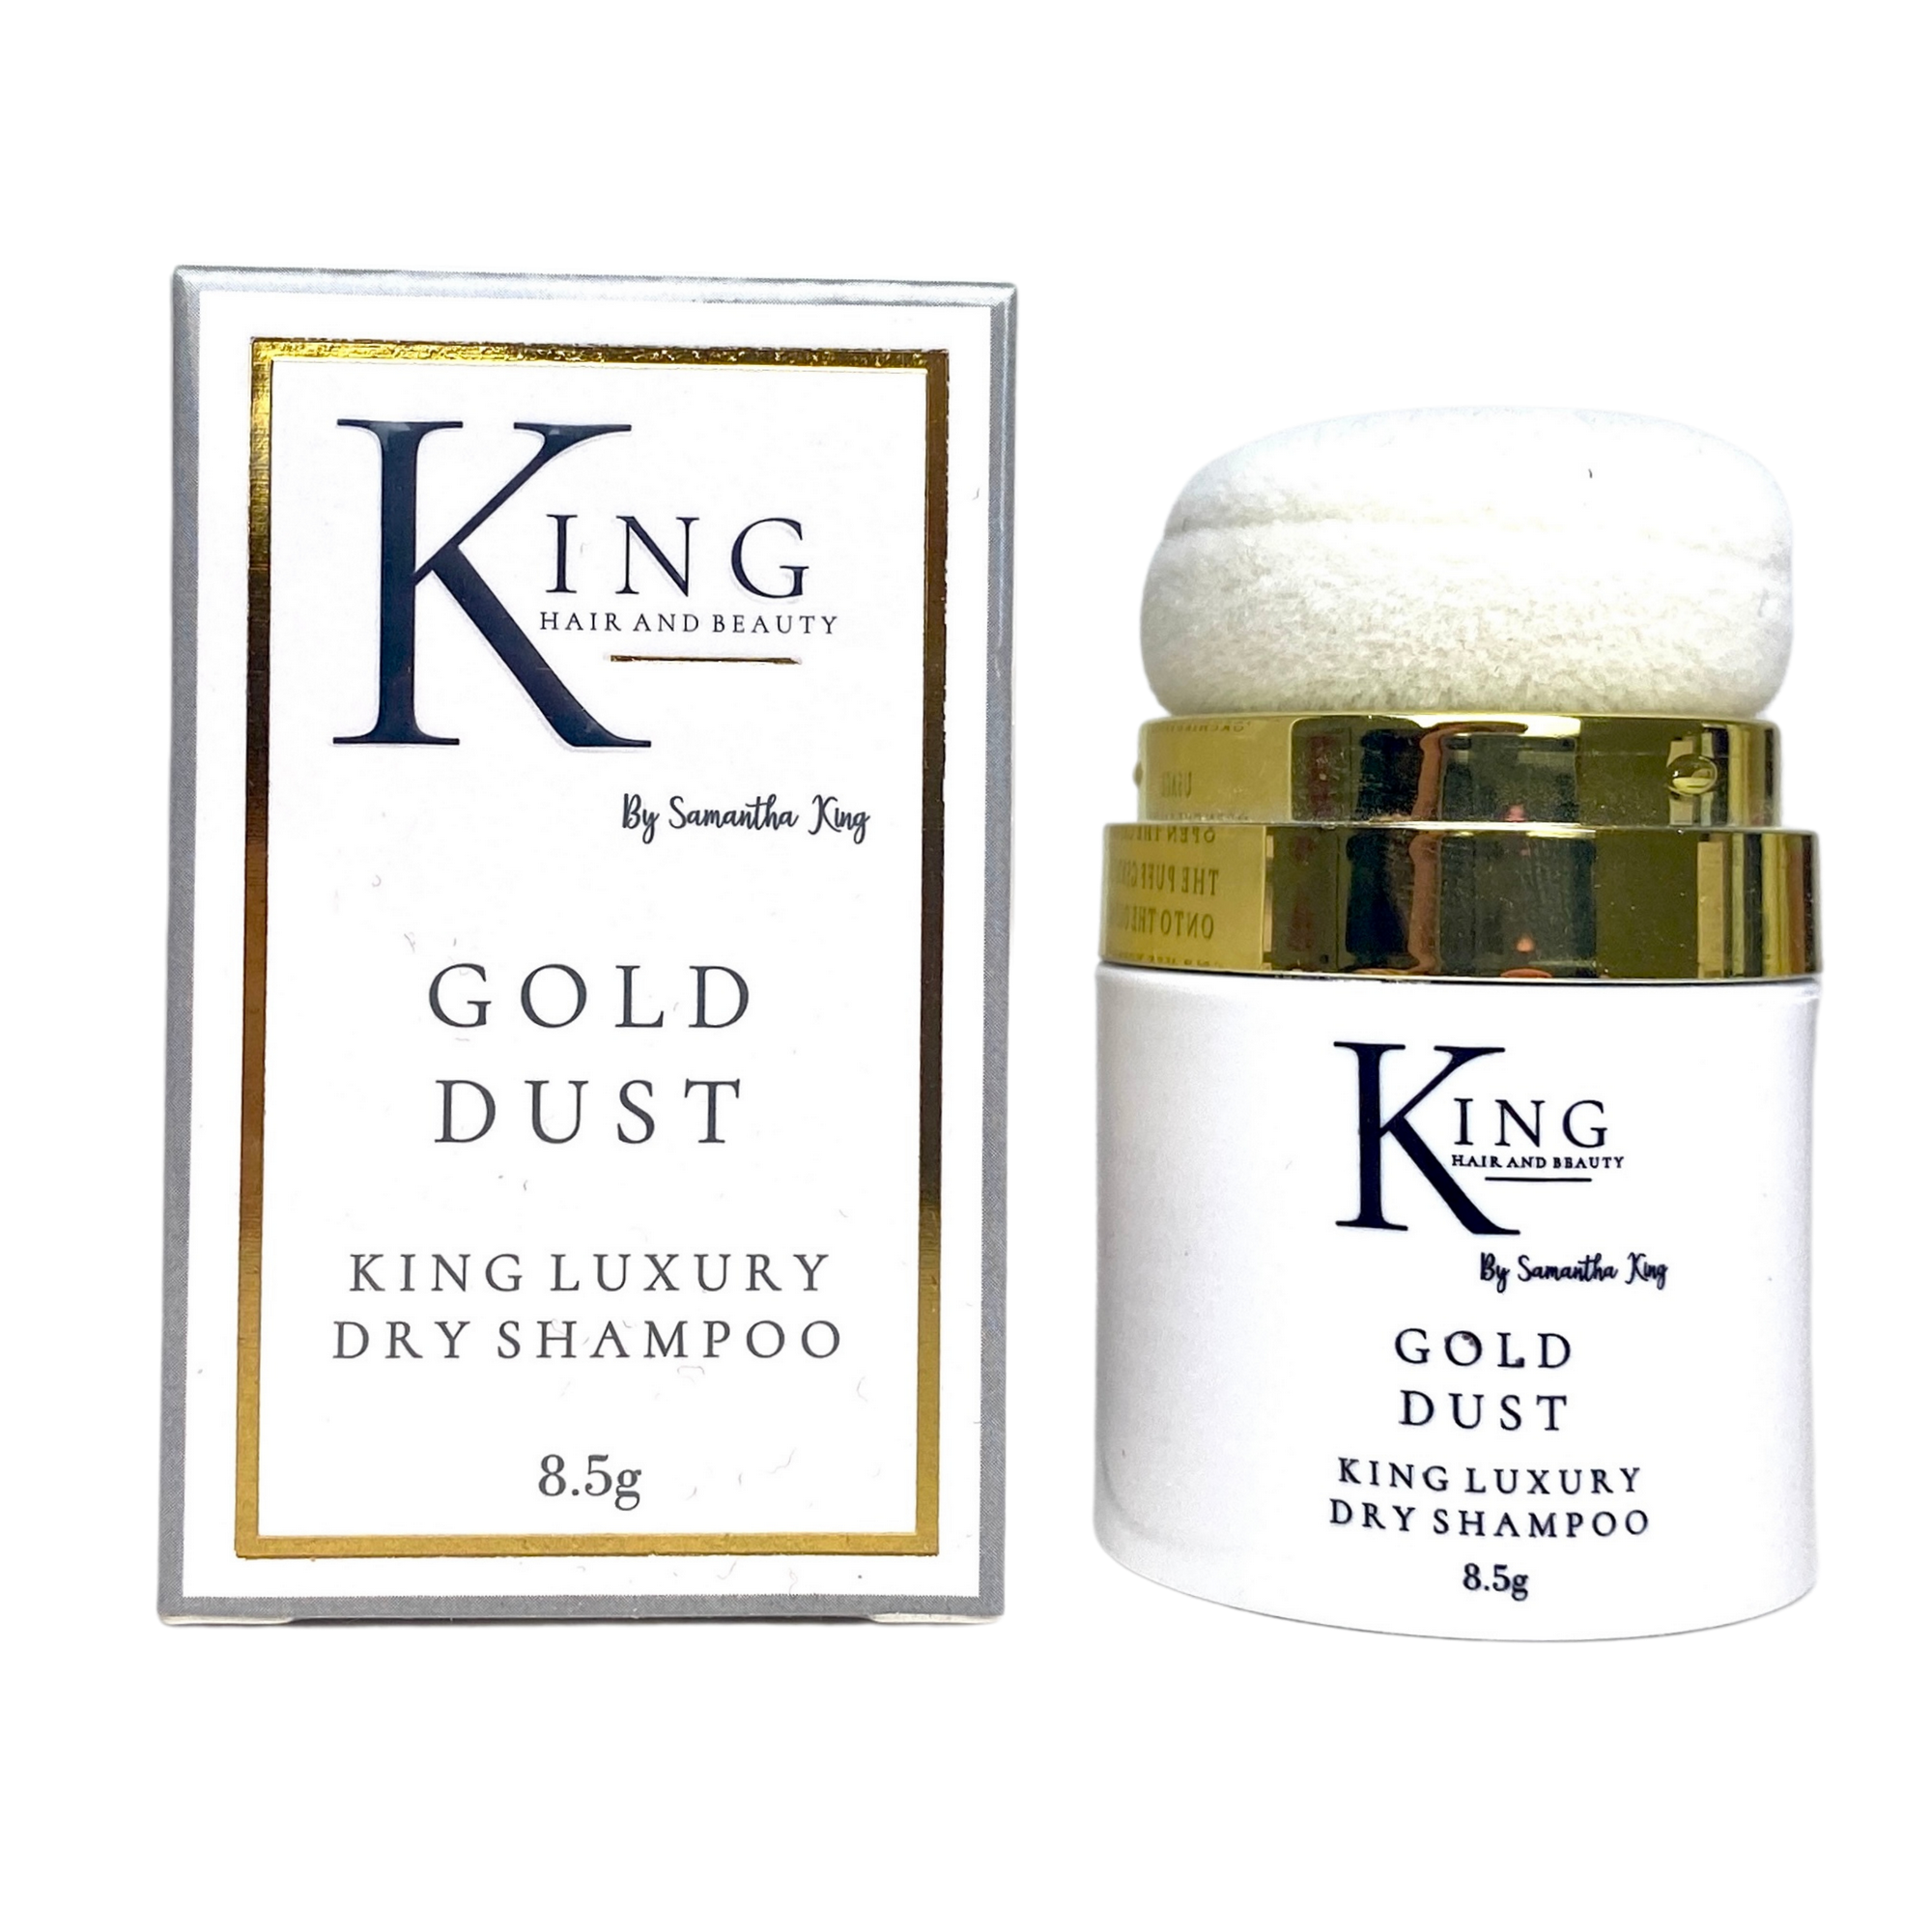 King Hair &amp; Beauty Gold Dust - Dry Shampoo 8.5g